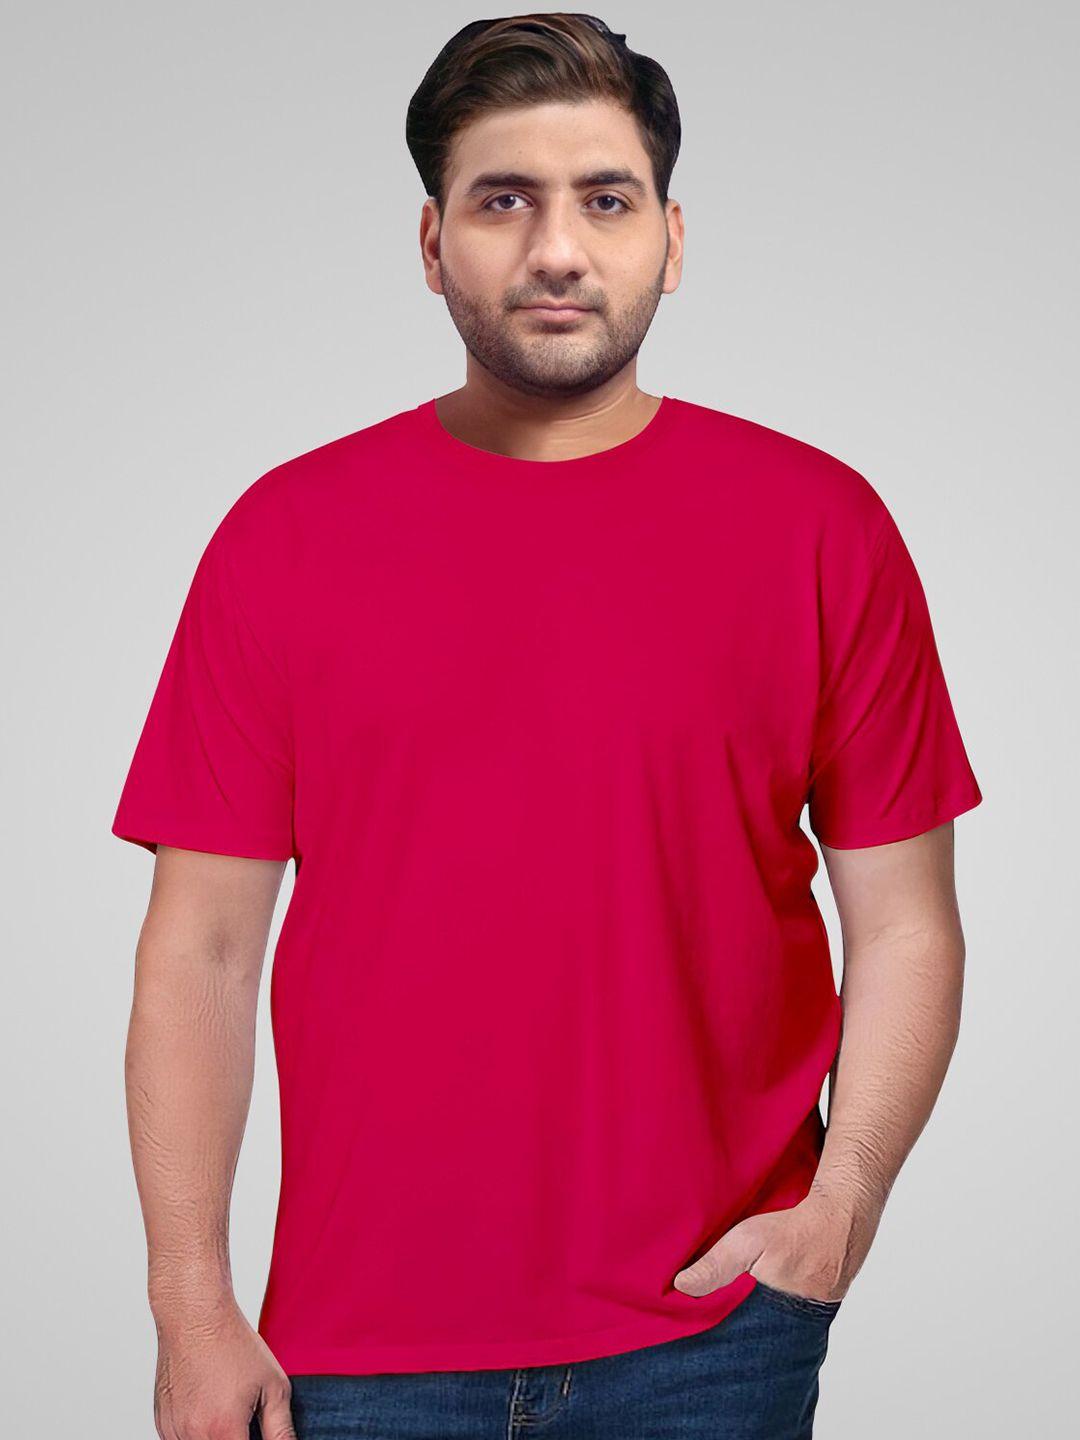 pootlu men maroon t-shirt